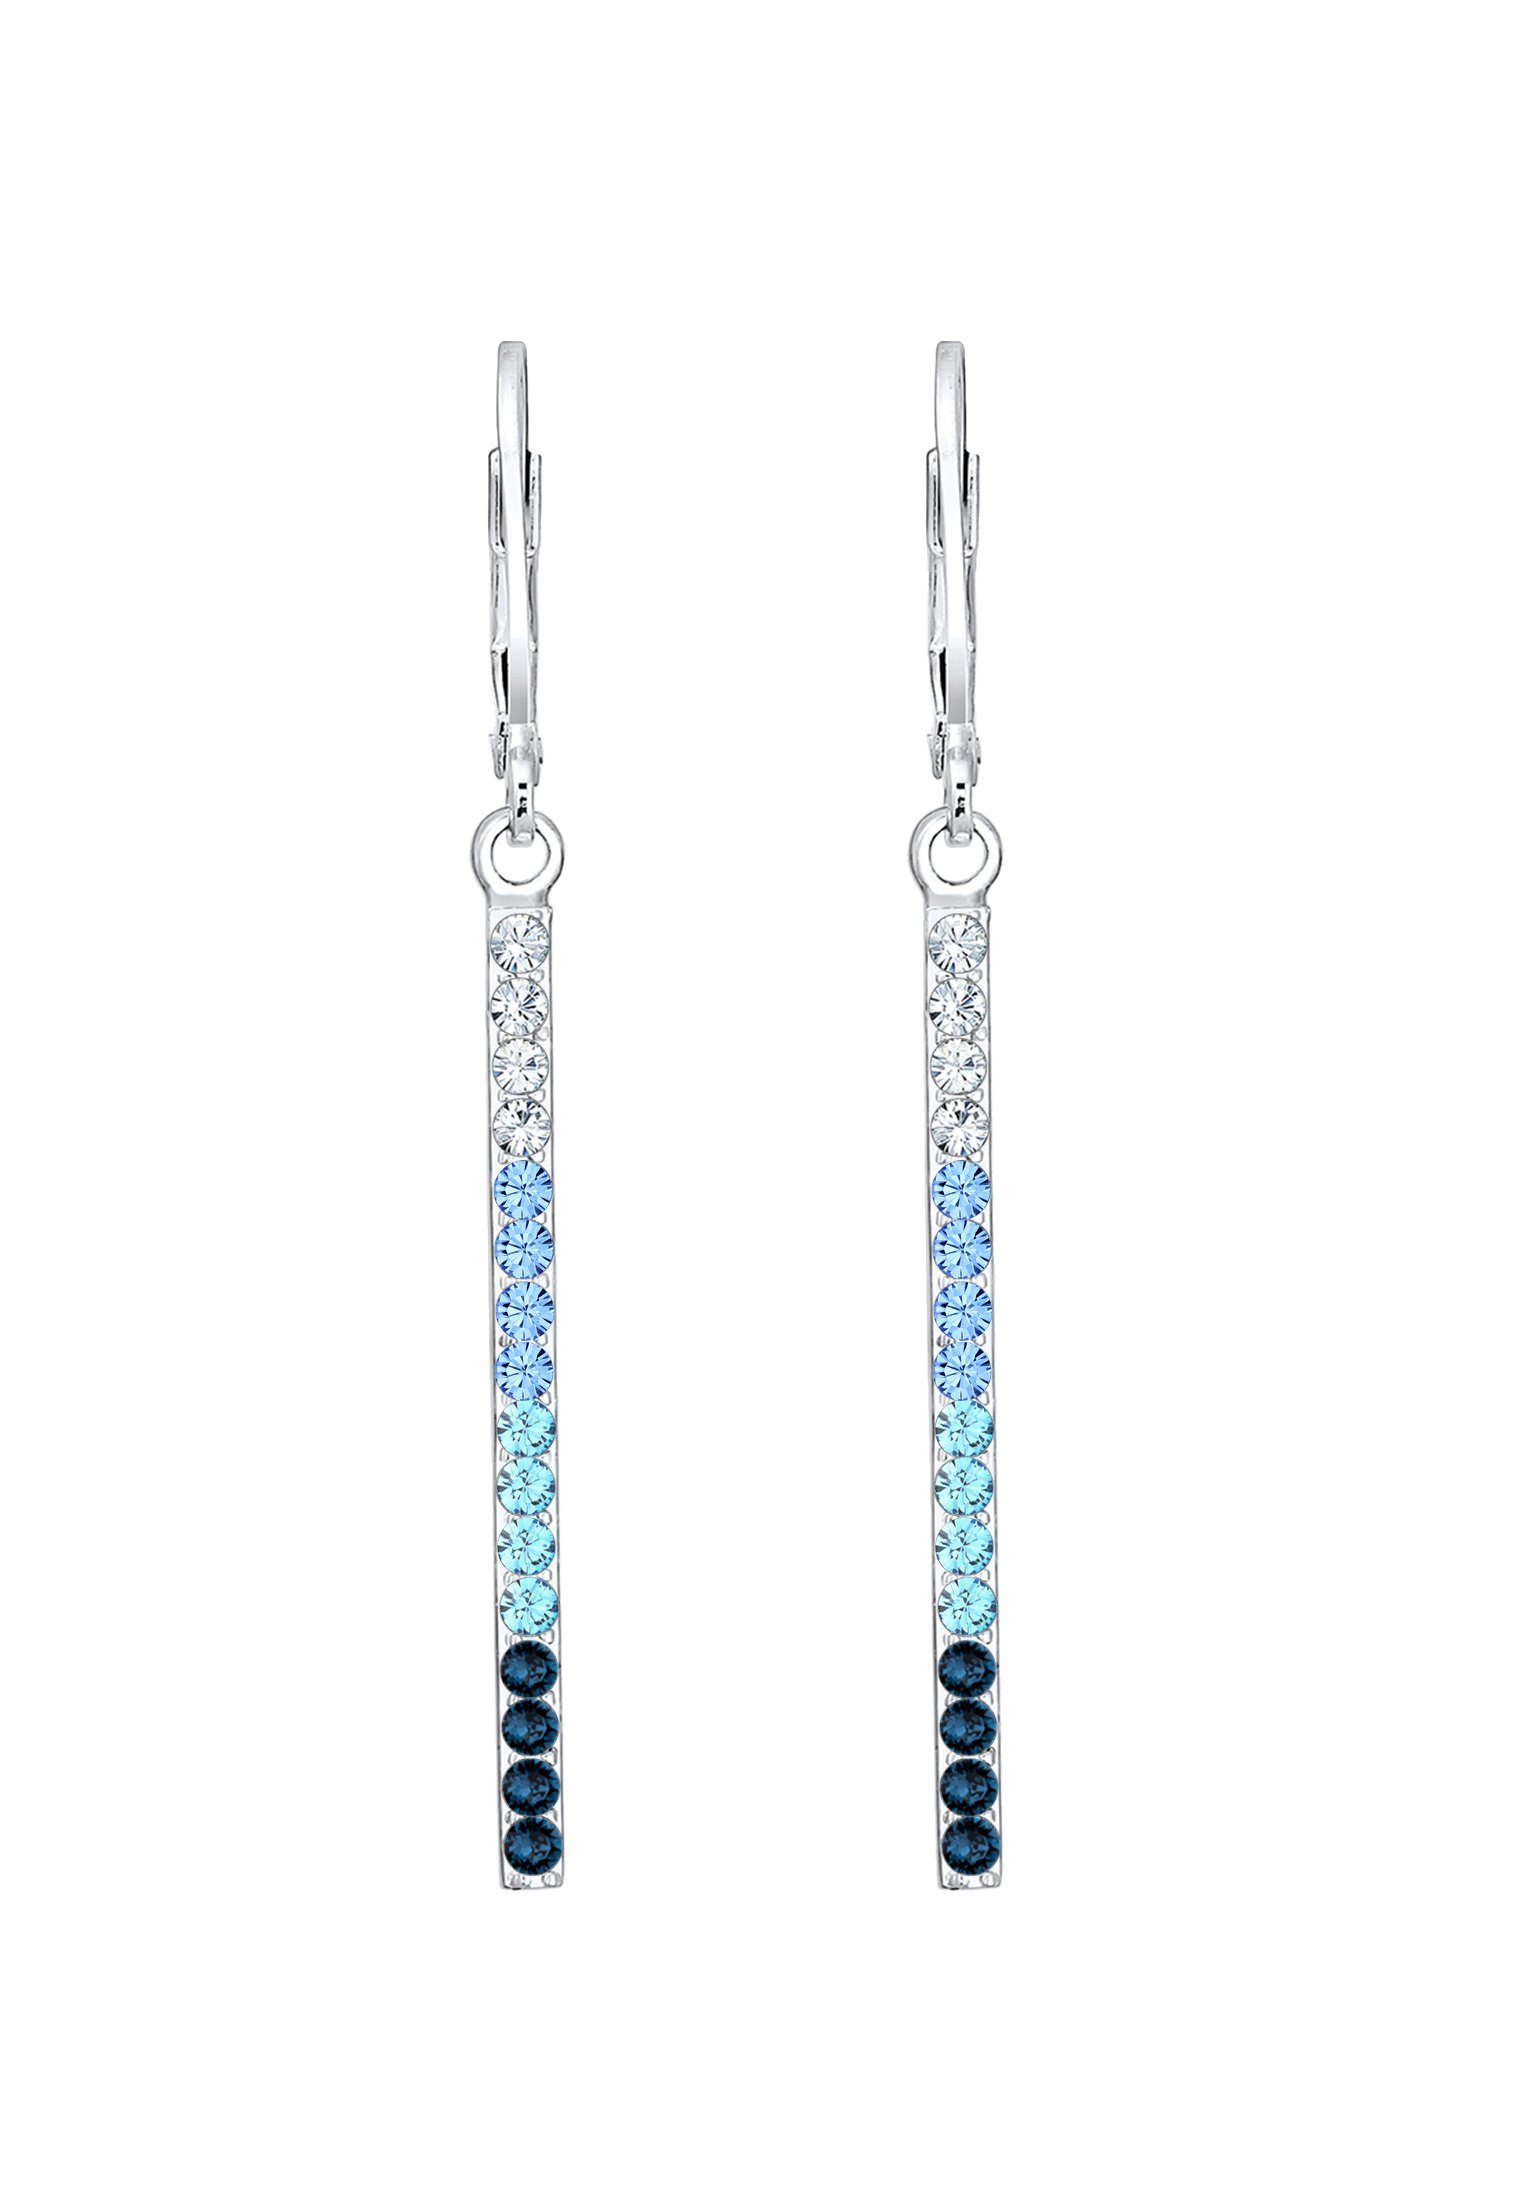 Ohrhänger Paar Silber Stab Kristalle mit Elli Blau 925 lang